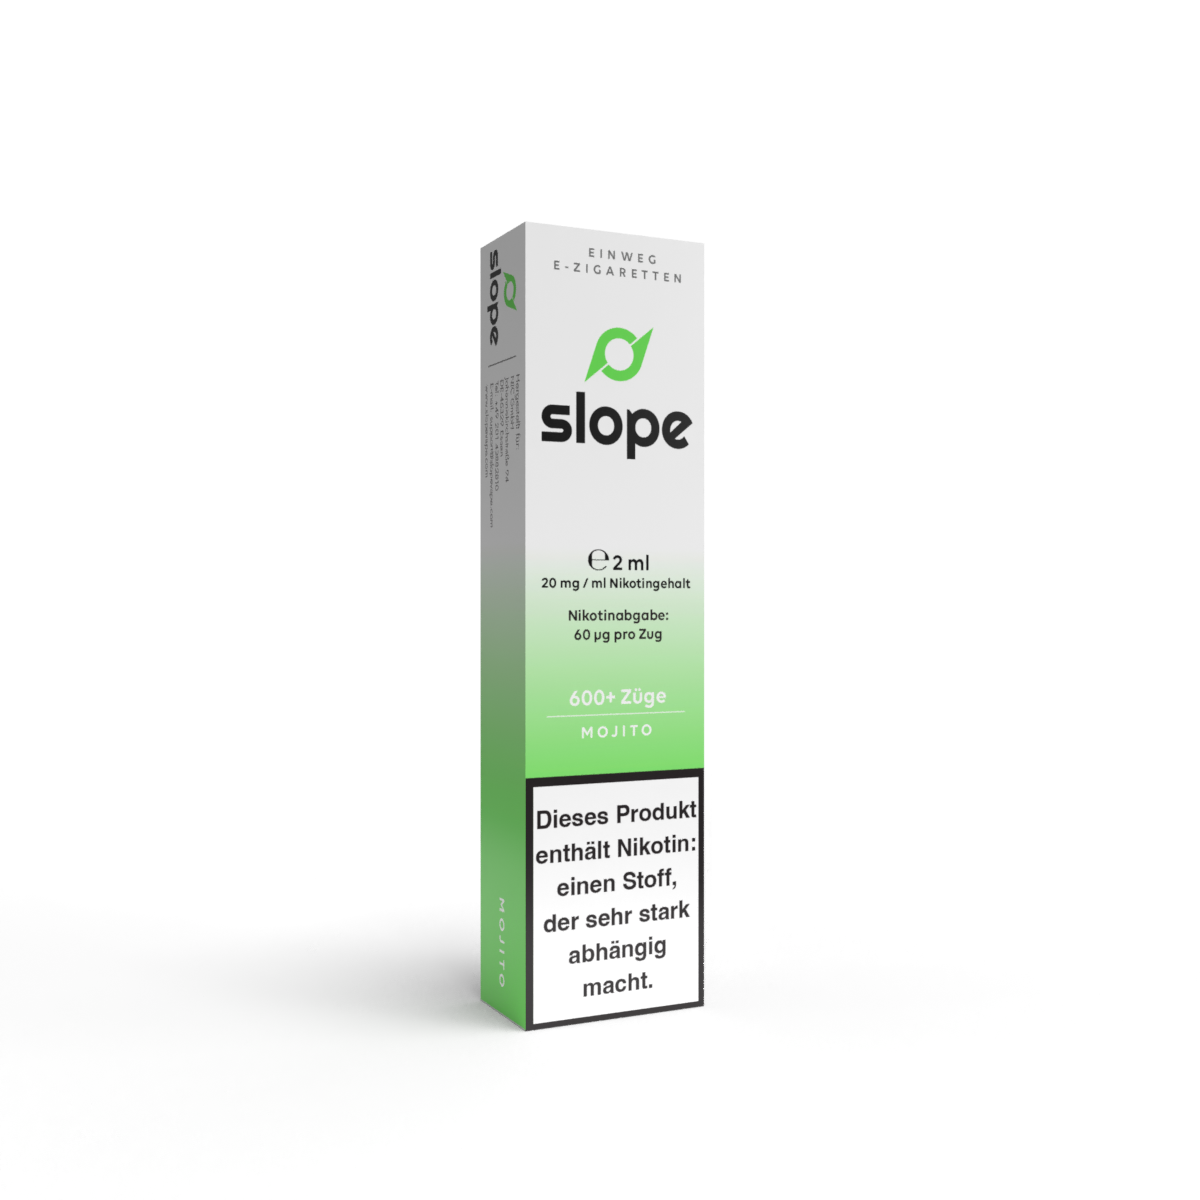 SLOPE Einweg E Zigarette 20mg/ml - Vape Stick - Mojito